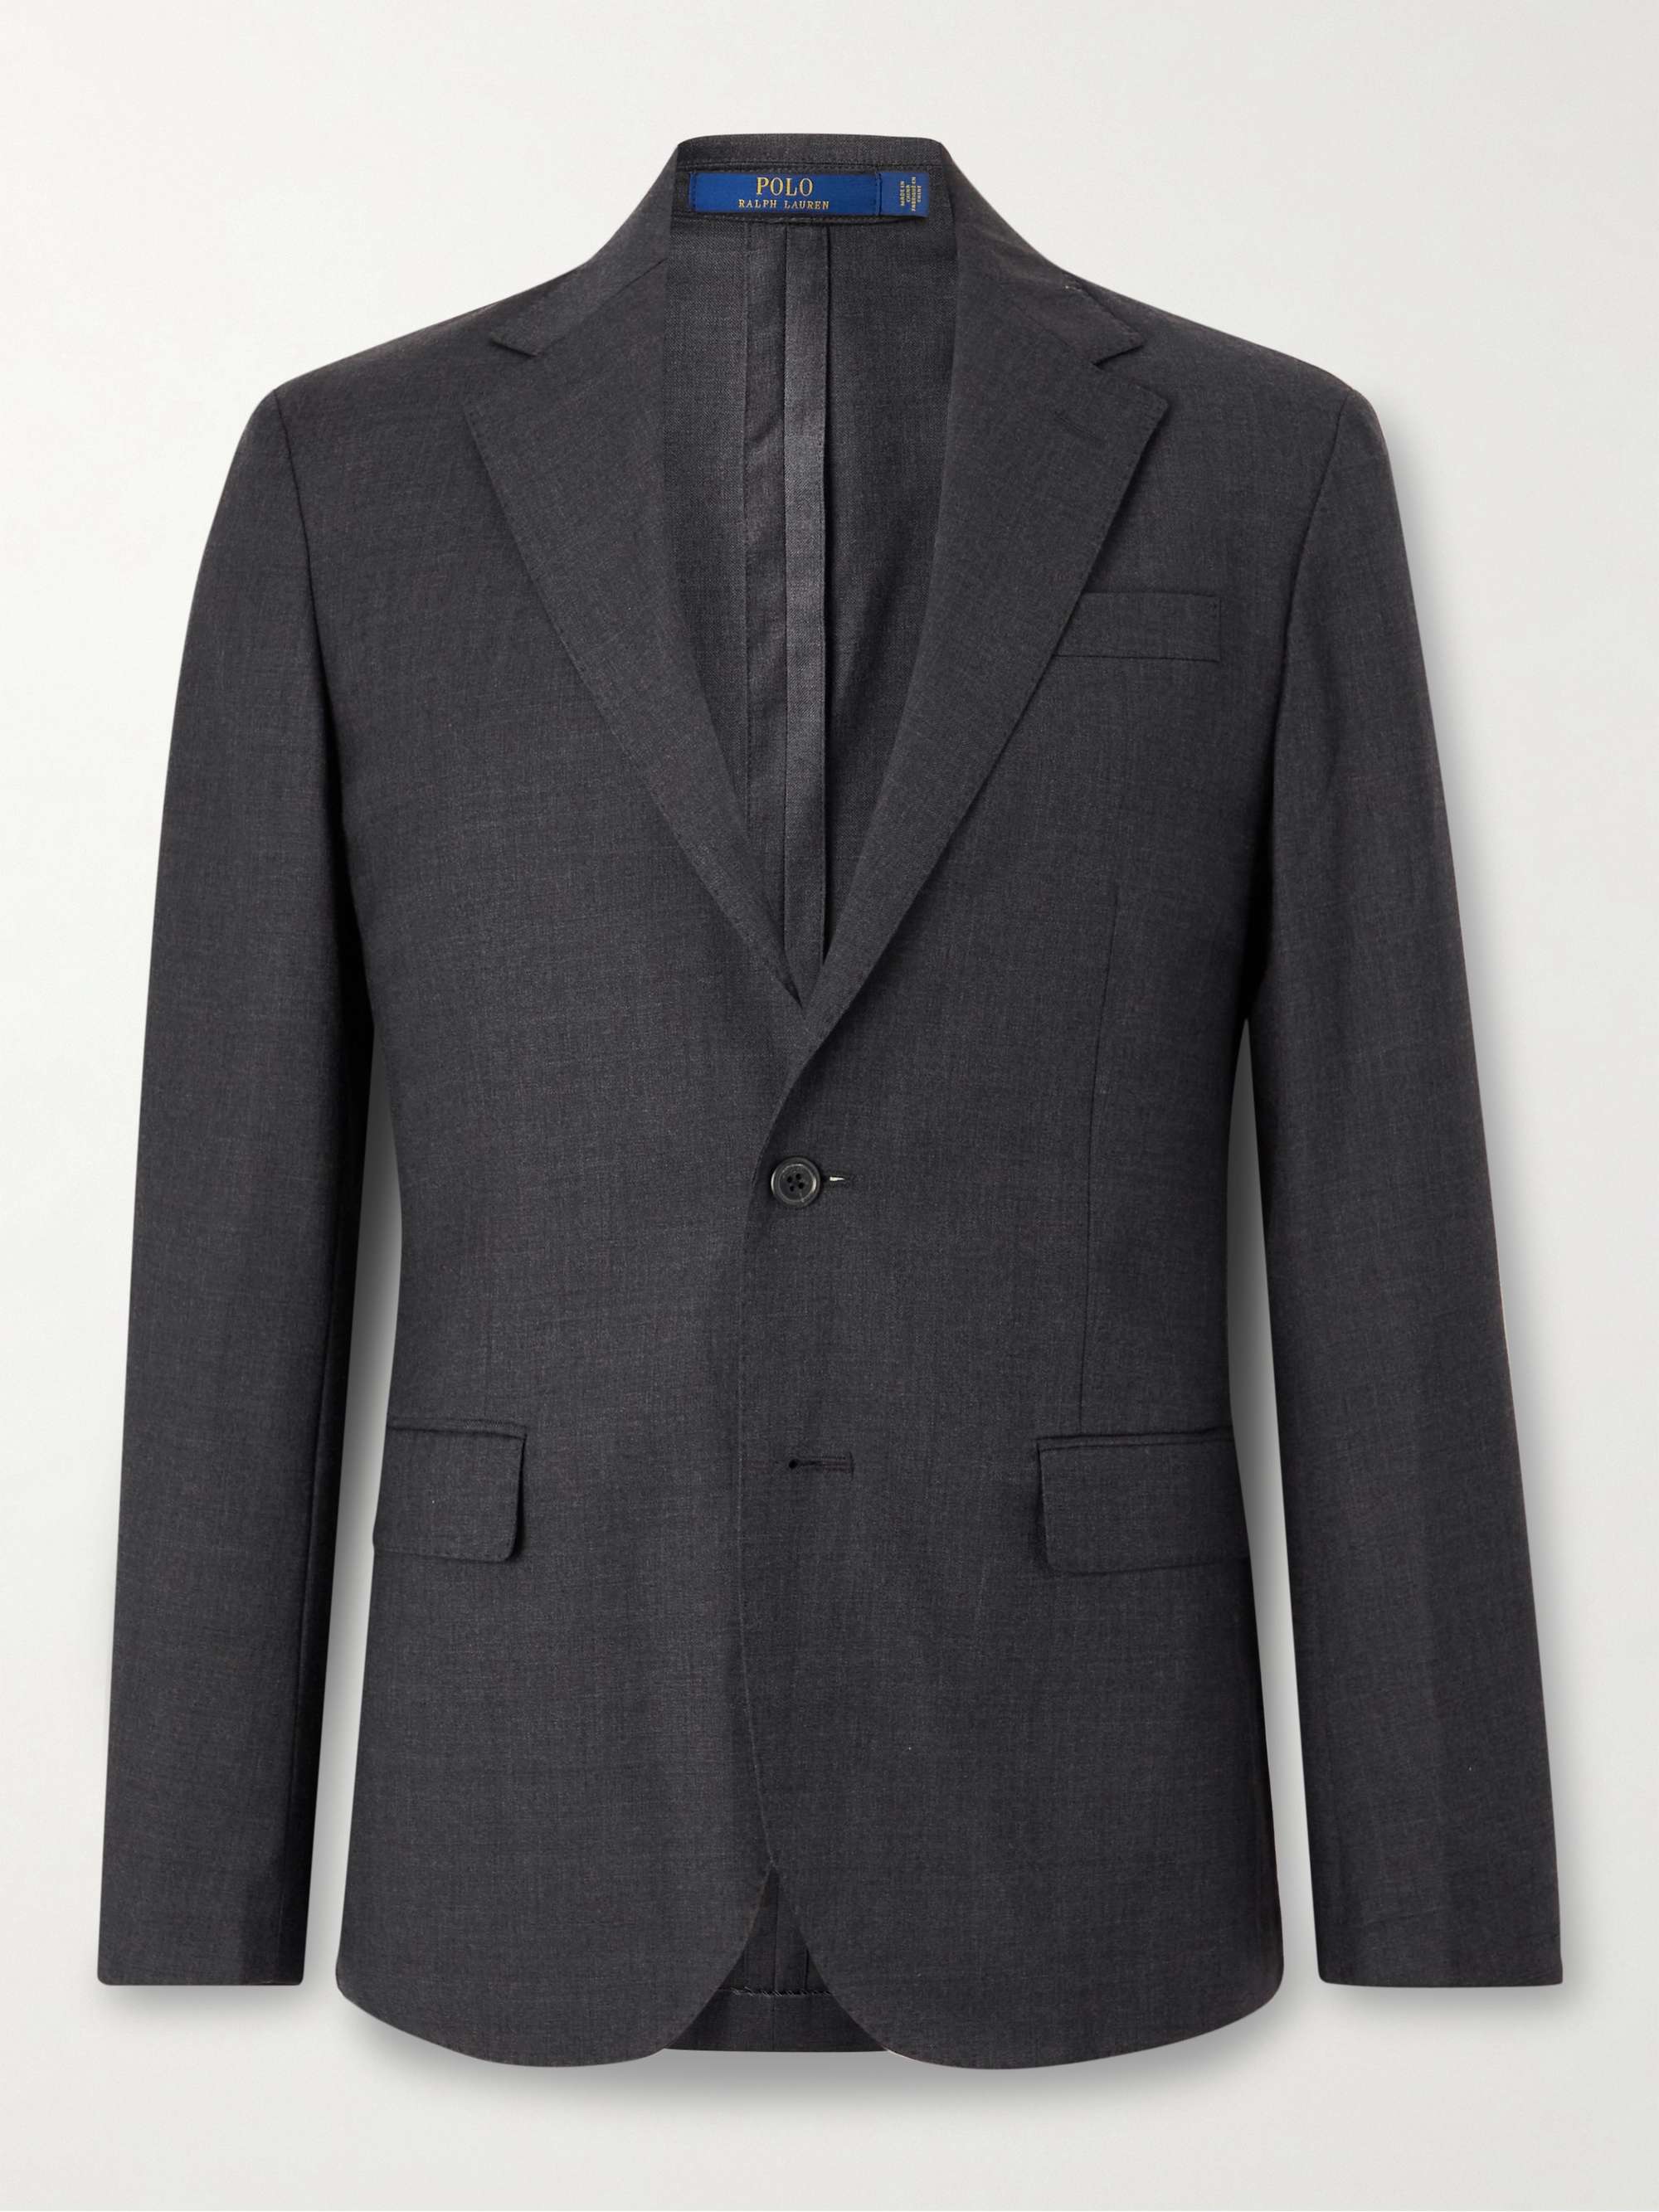 POLO RALPH LAUREN Wool-Blend Suit Jacket | MR PORTER